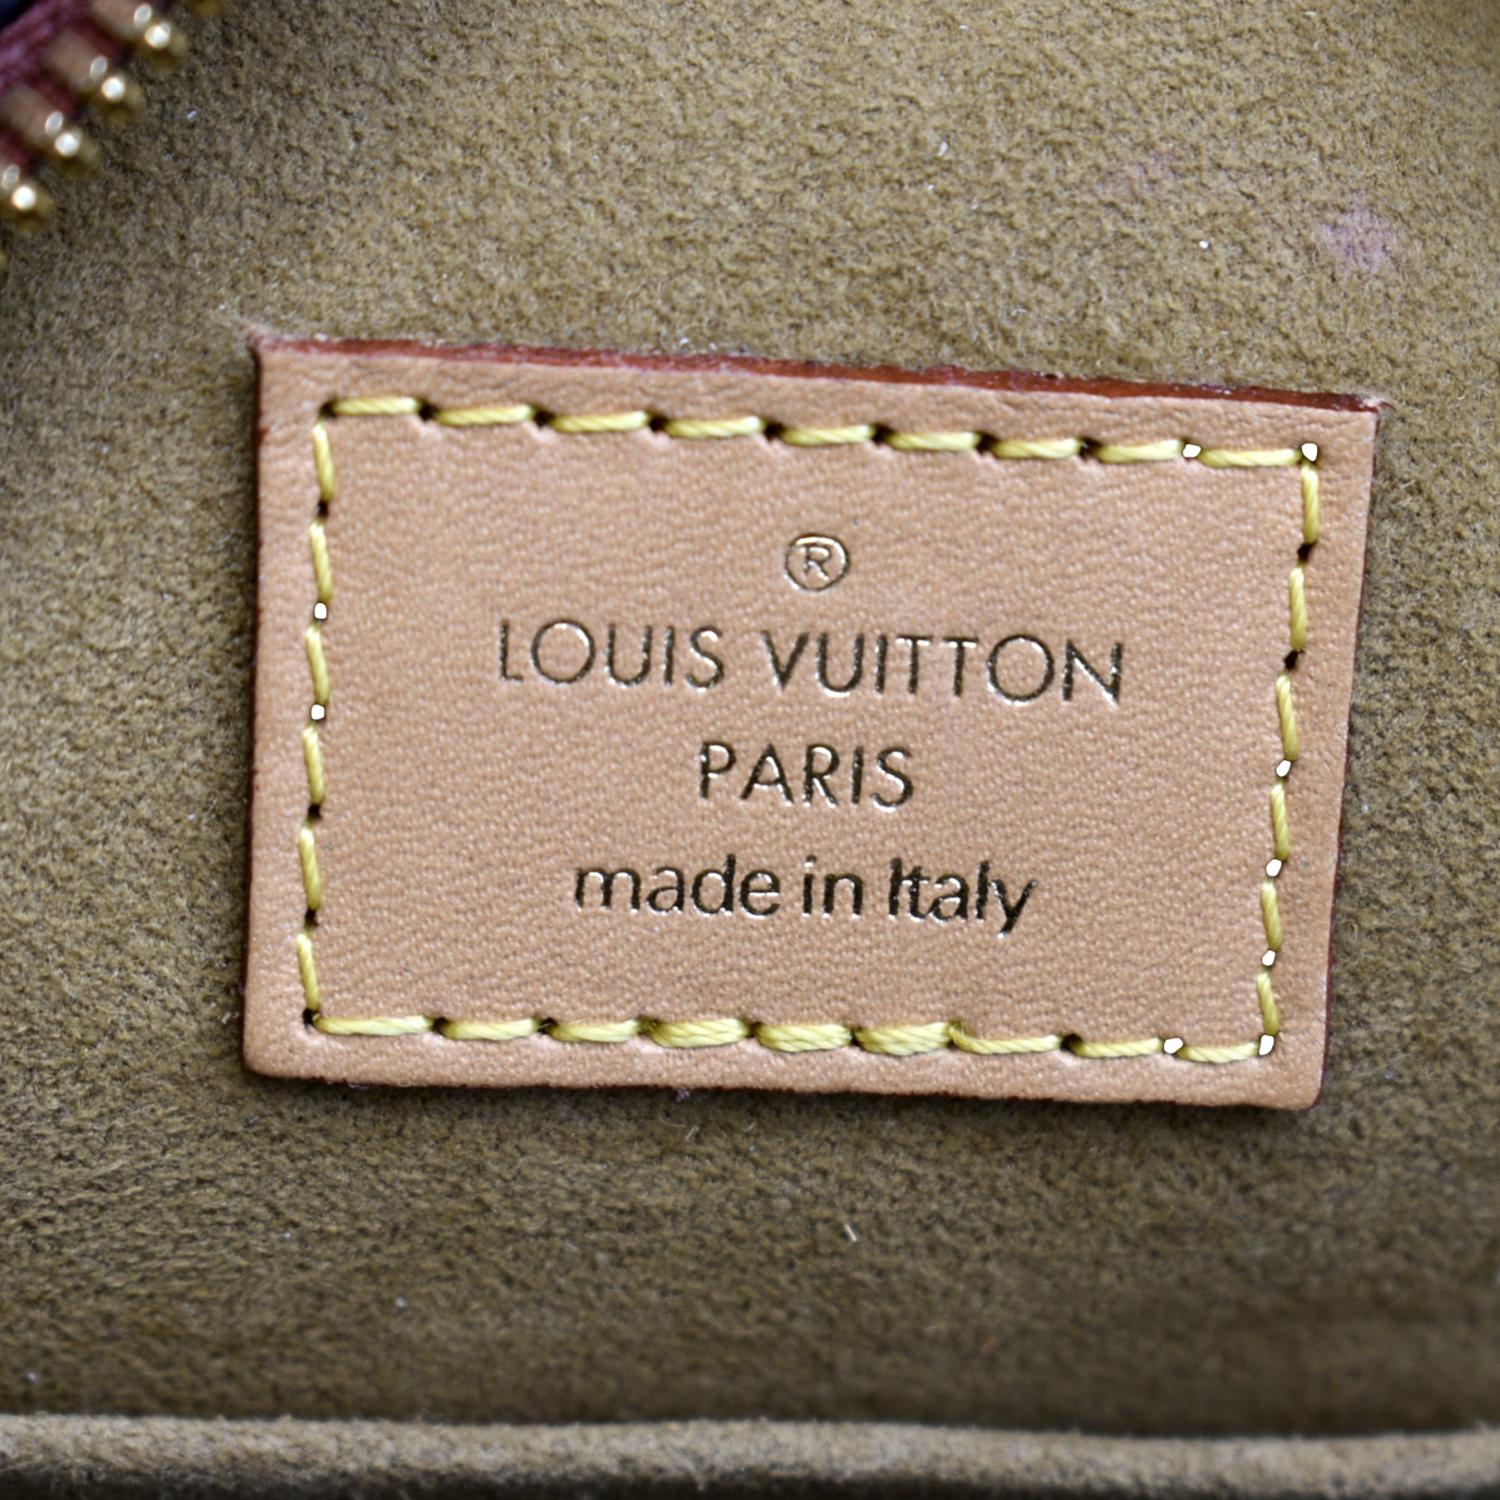 Louis Vuitton Boite Chapeau Souple  Boite chapeau souple mm outfit, Louis  vuitton, Bag lady